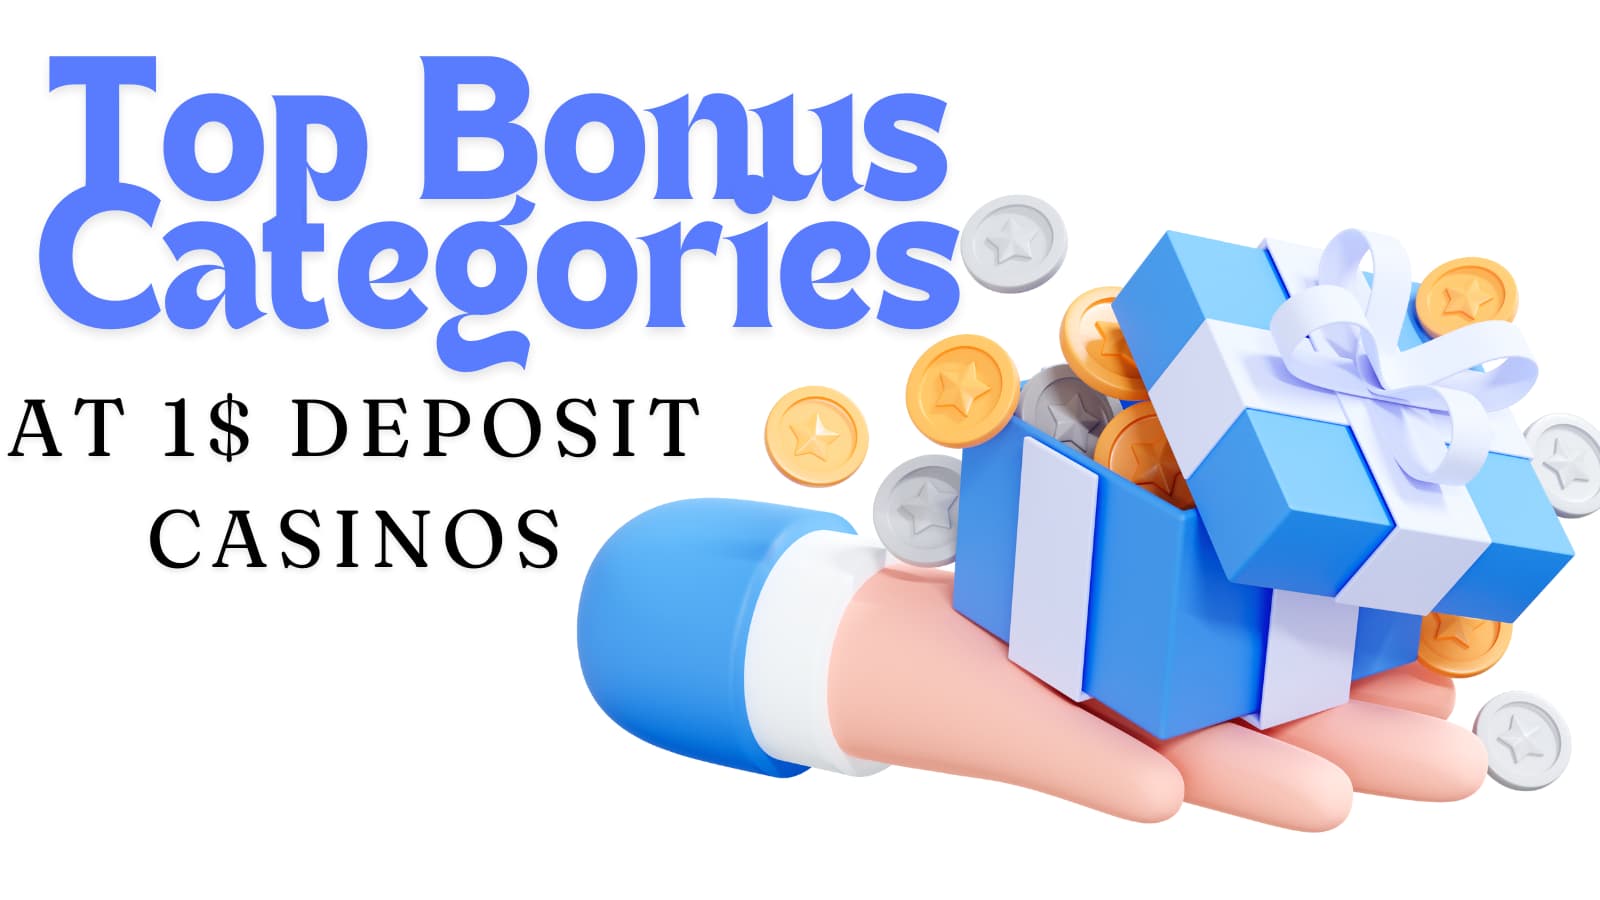 top bonus categories at 1$ deposit casinos